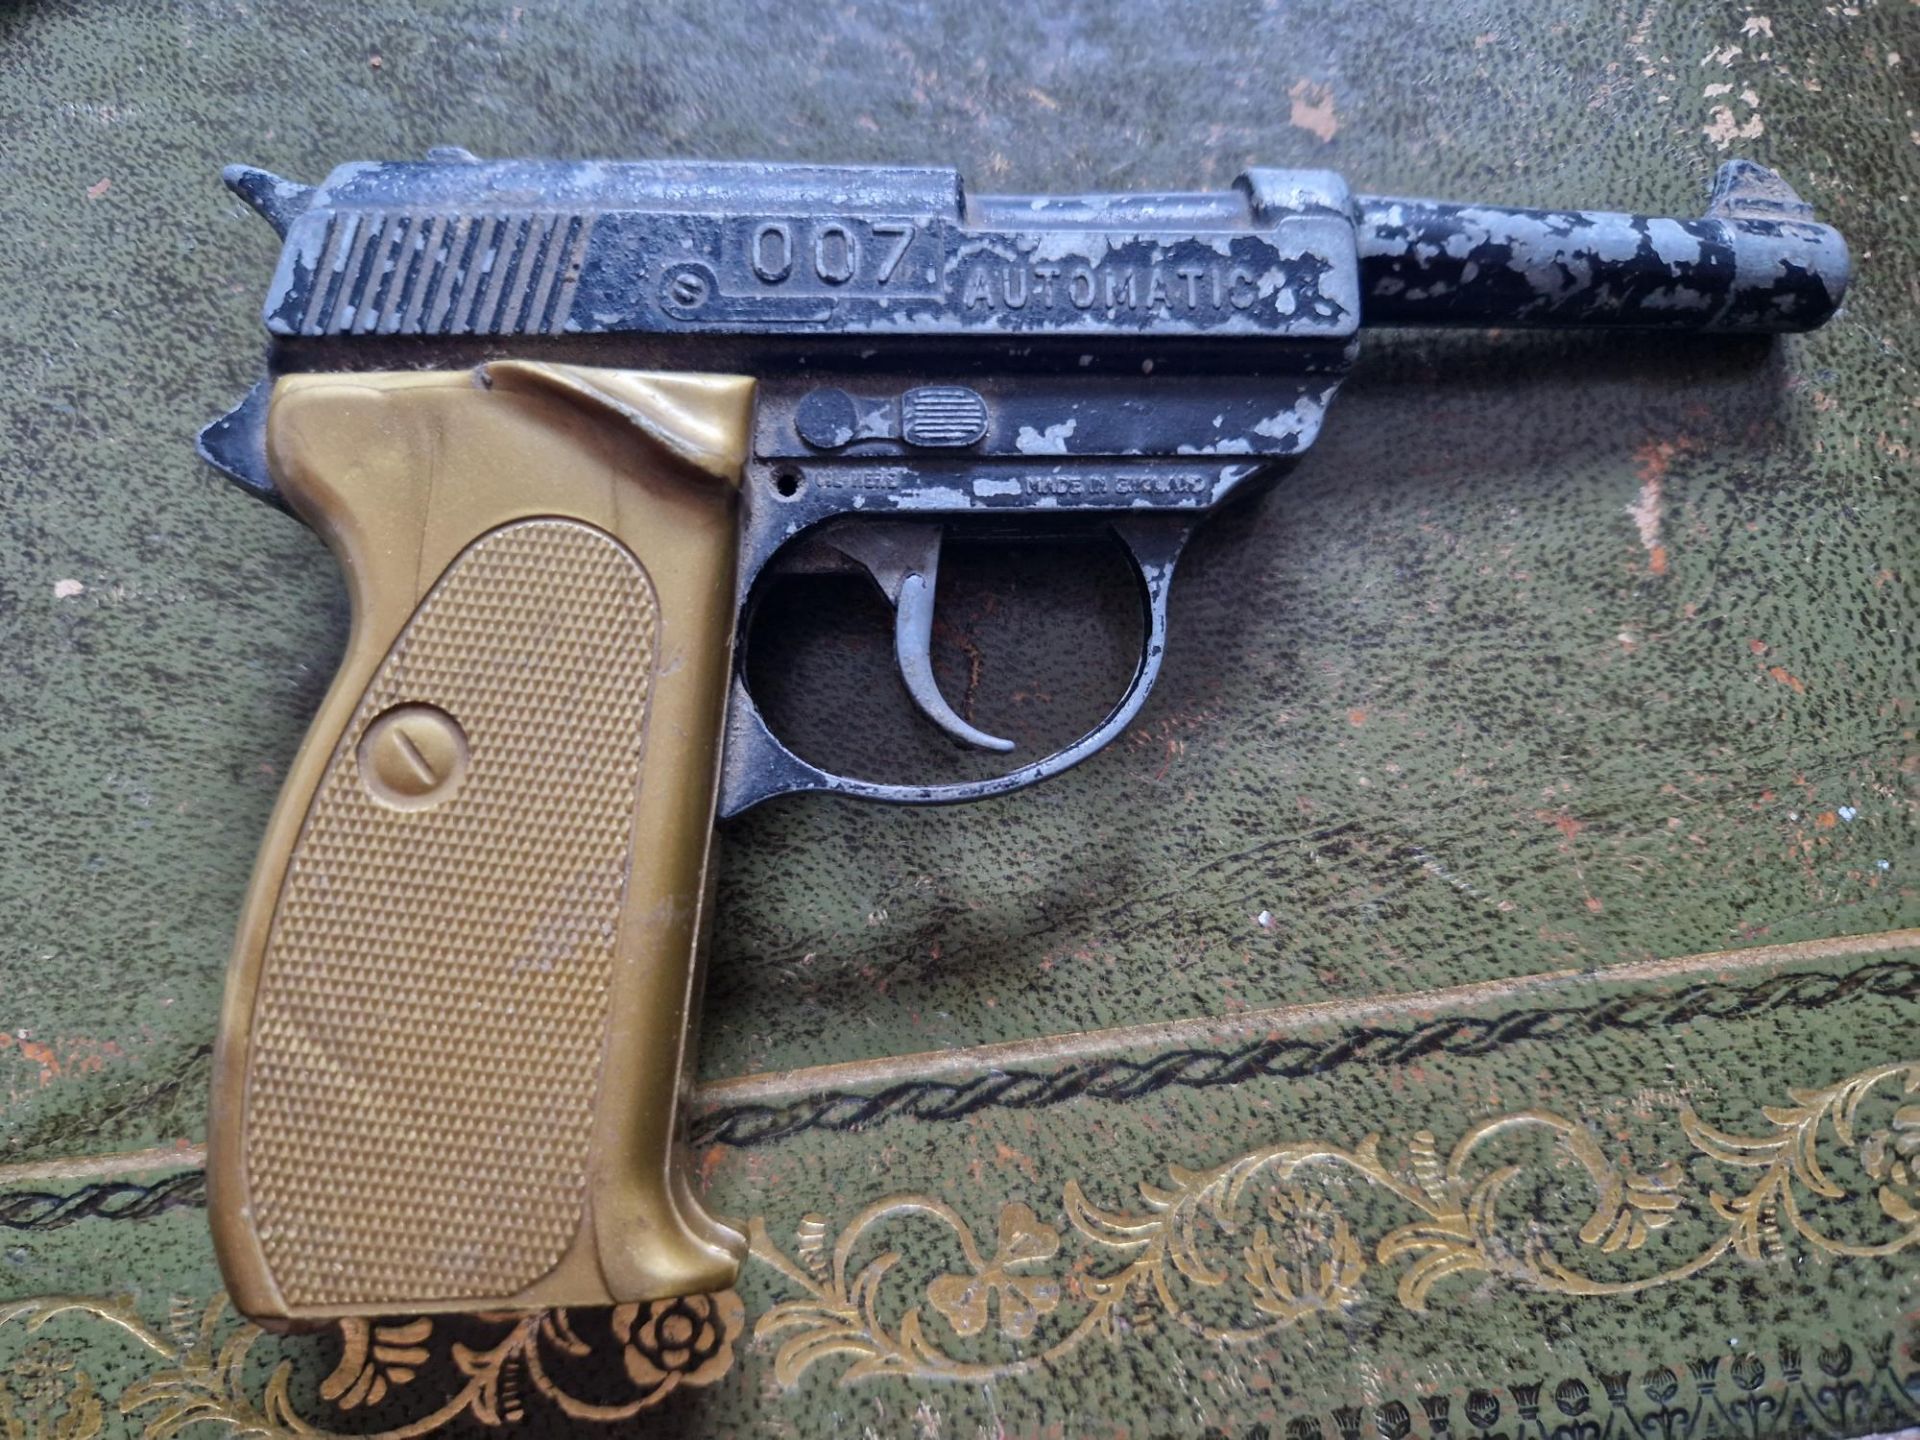 James bond 007 Collectible gun model - Image 2 of 2